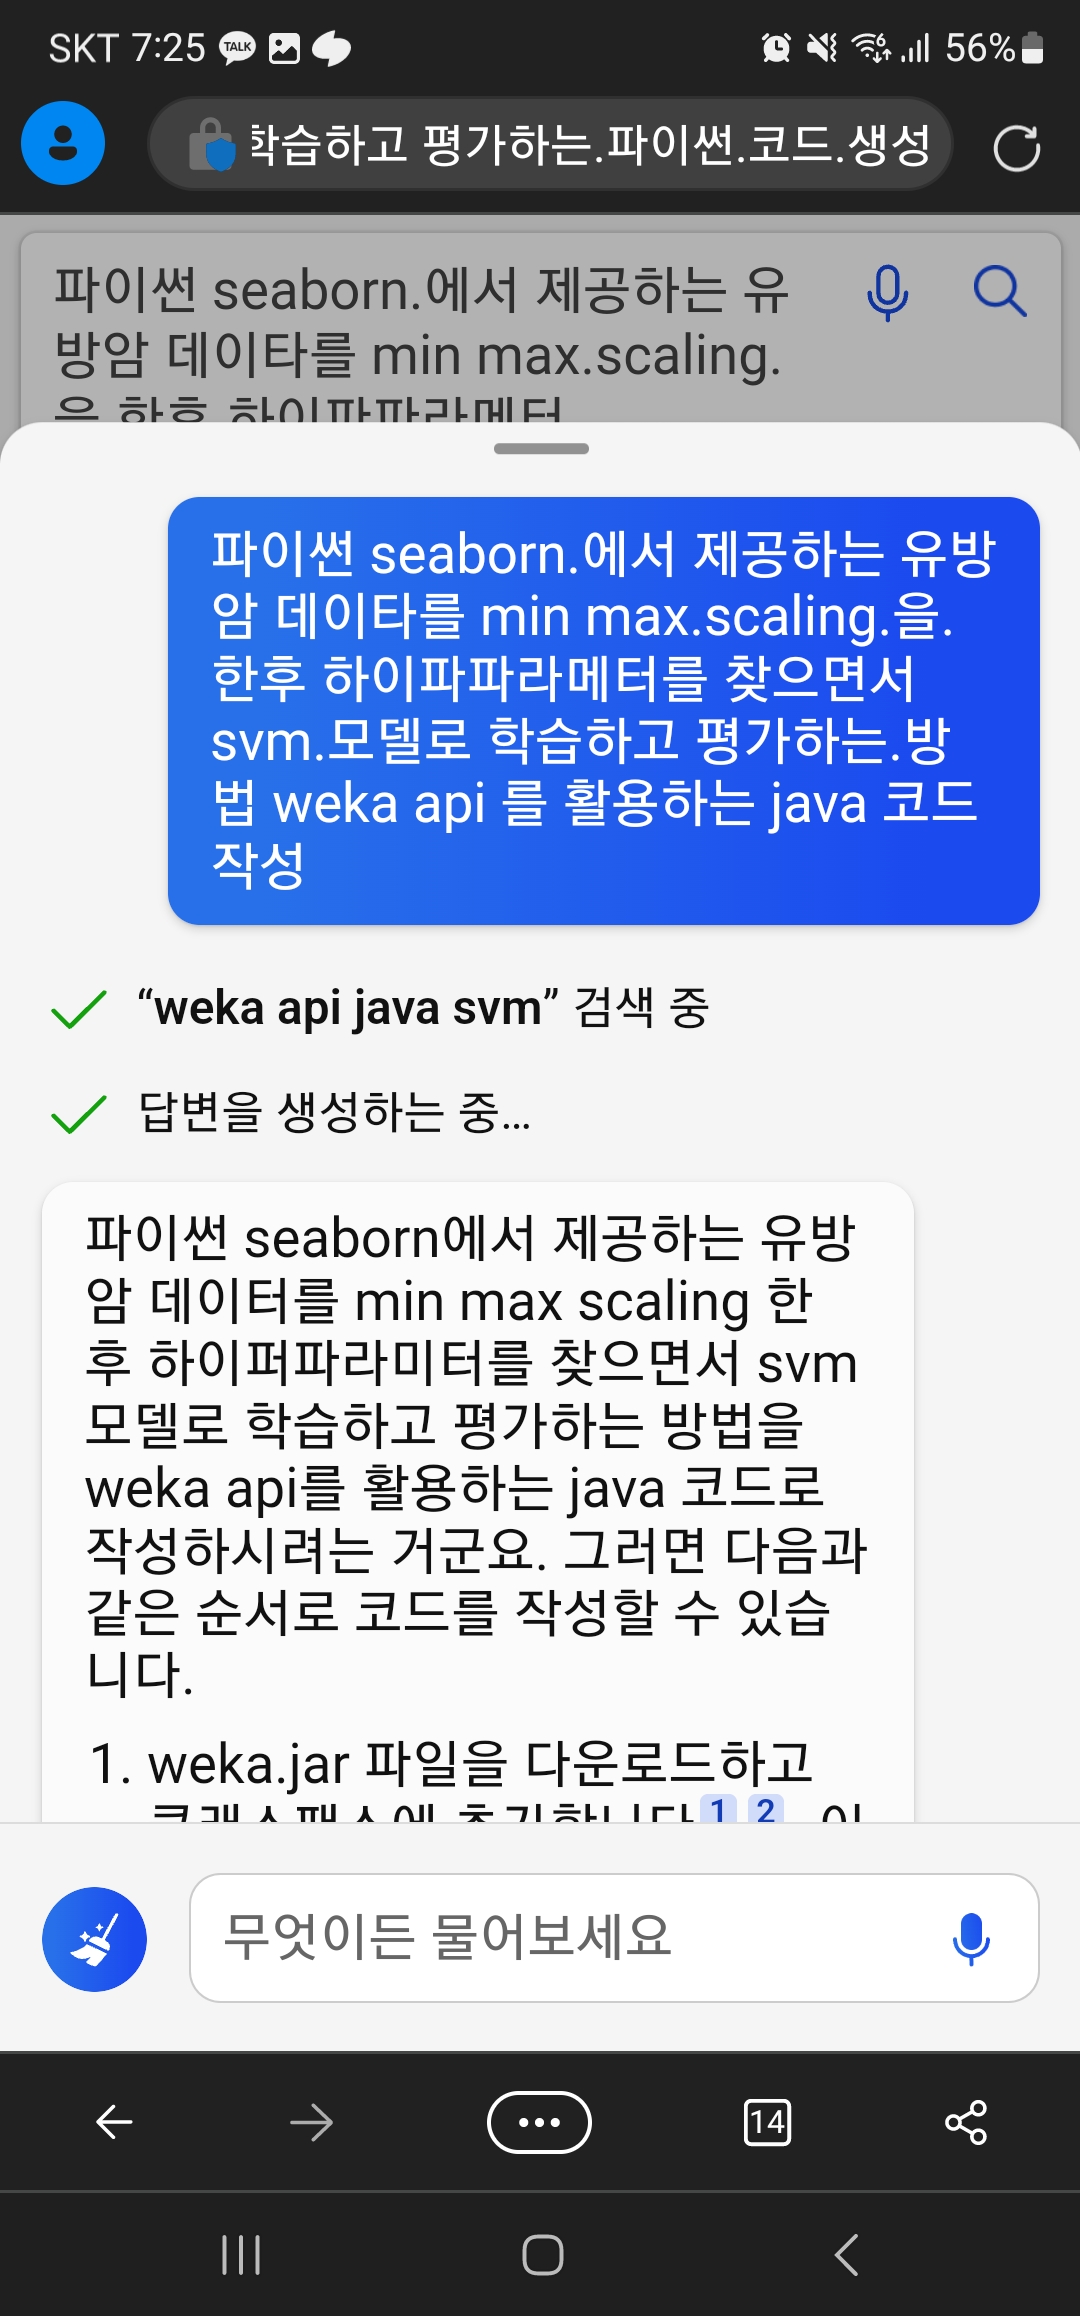 Weka API 활용 Java 코드 생성 질문/답변